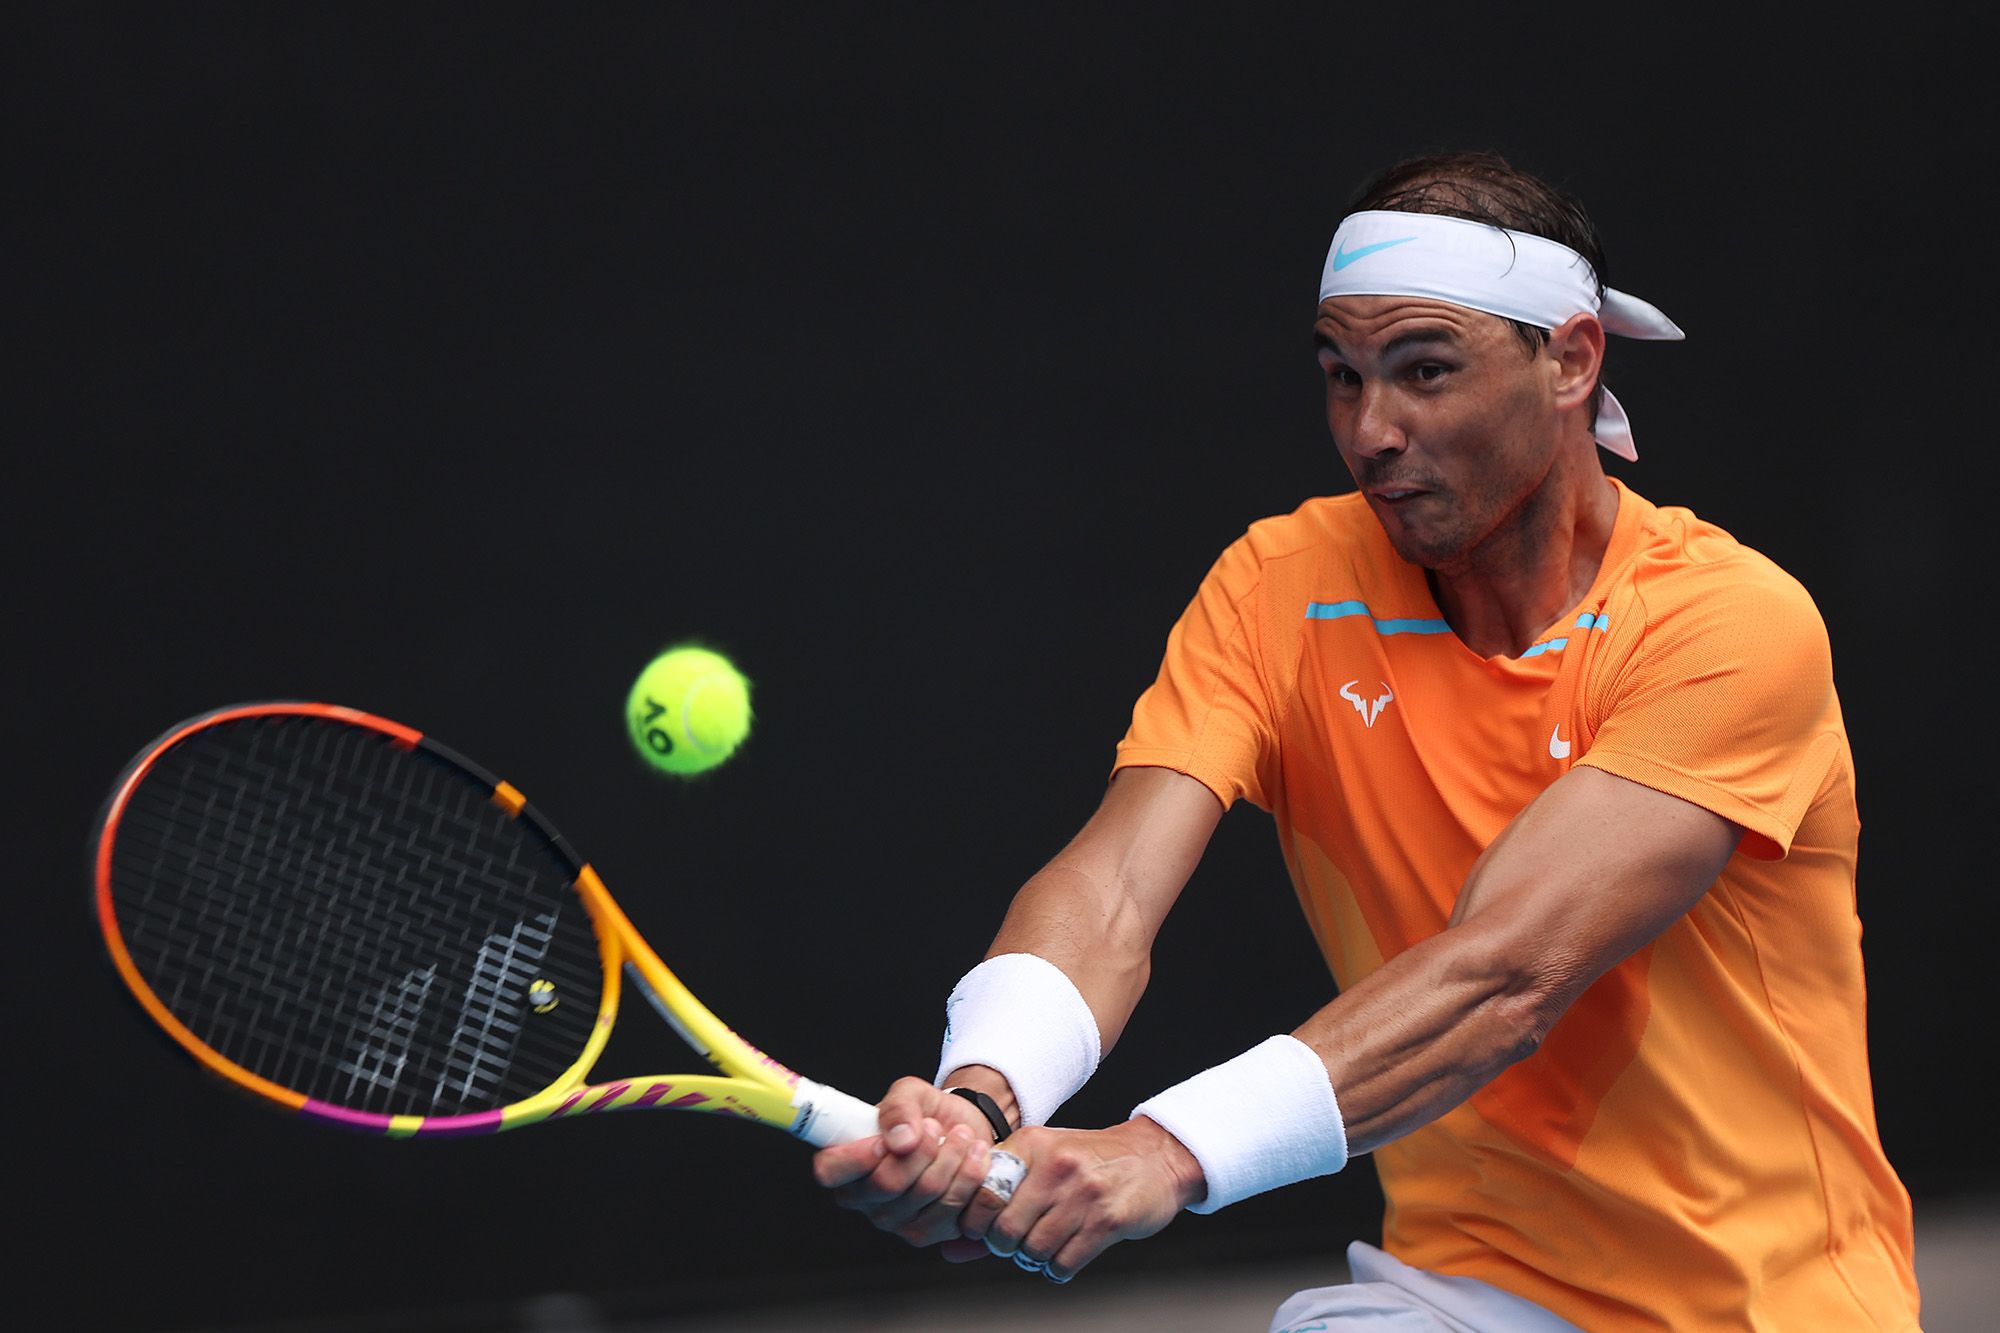 ATP, WTA and Grand Slams align on Netflix tennis docuseries - SportsPro